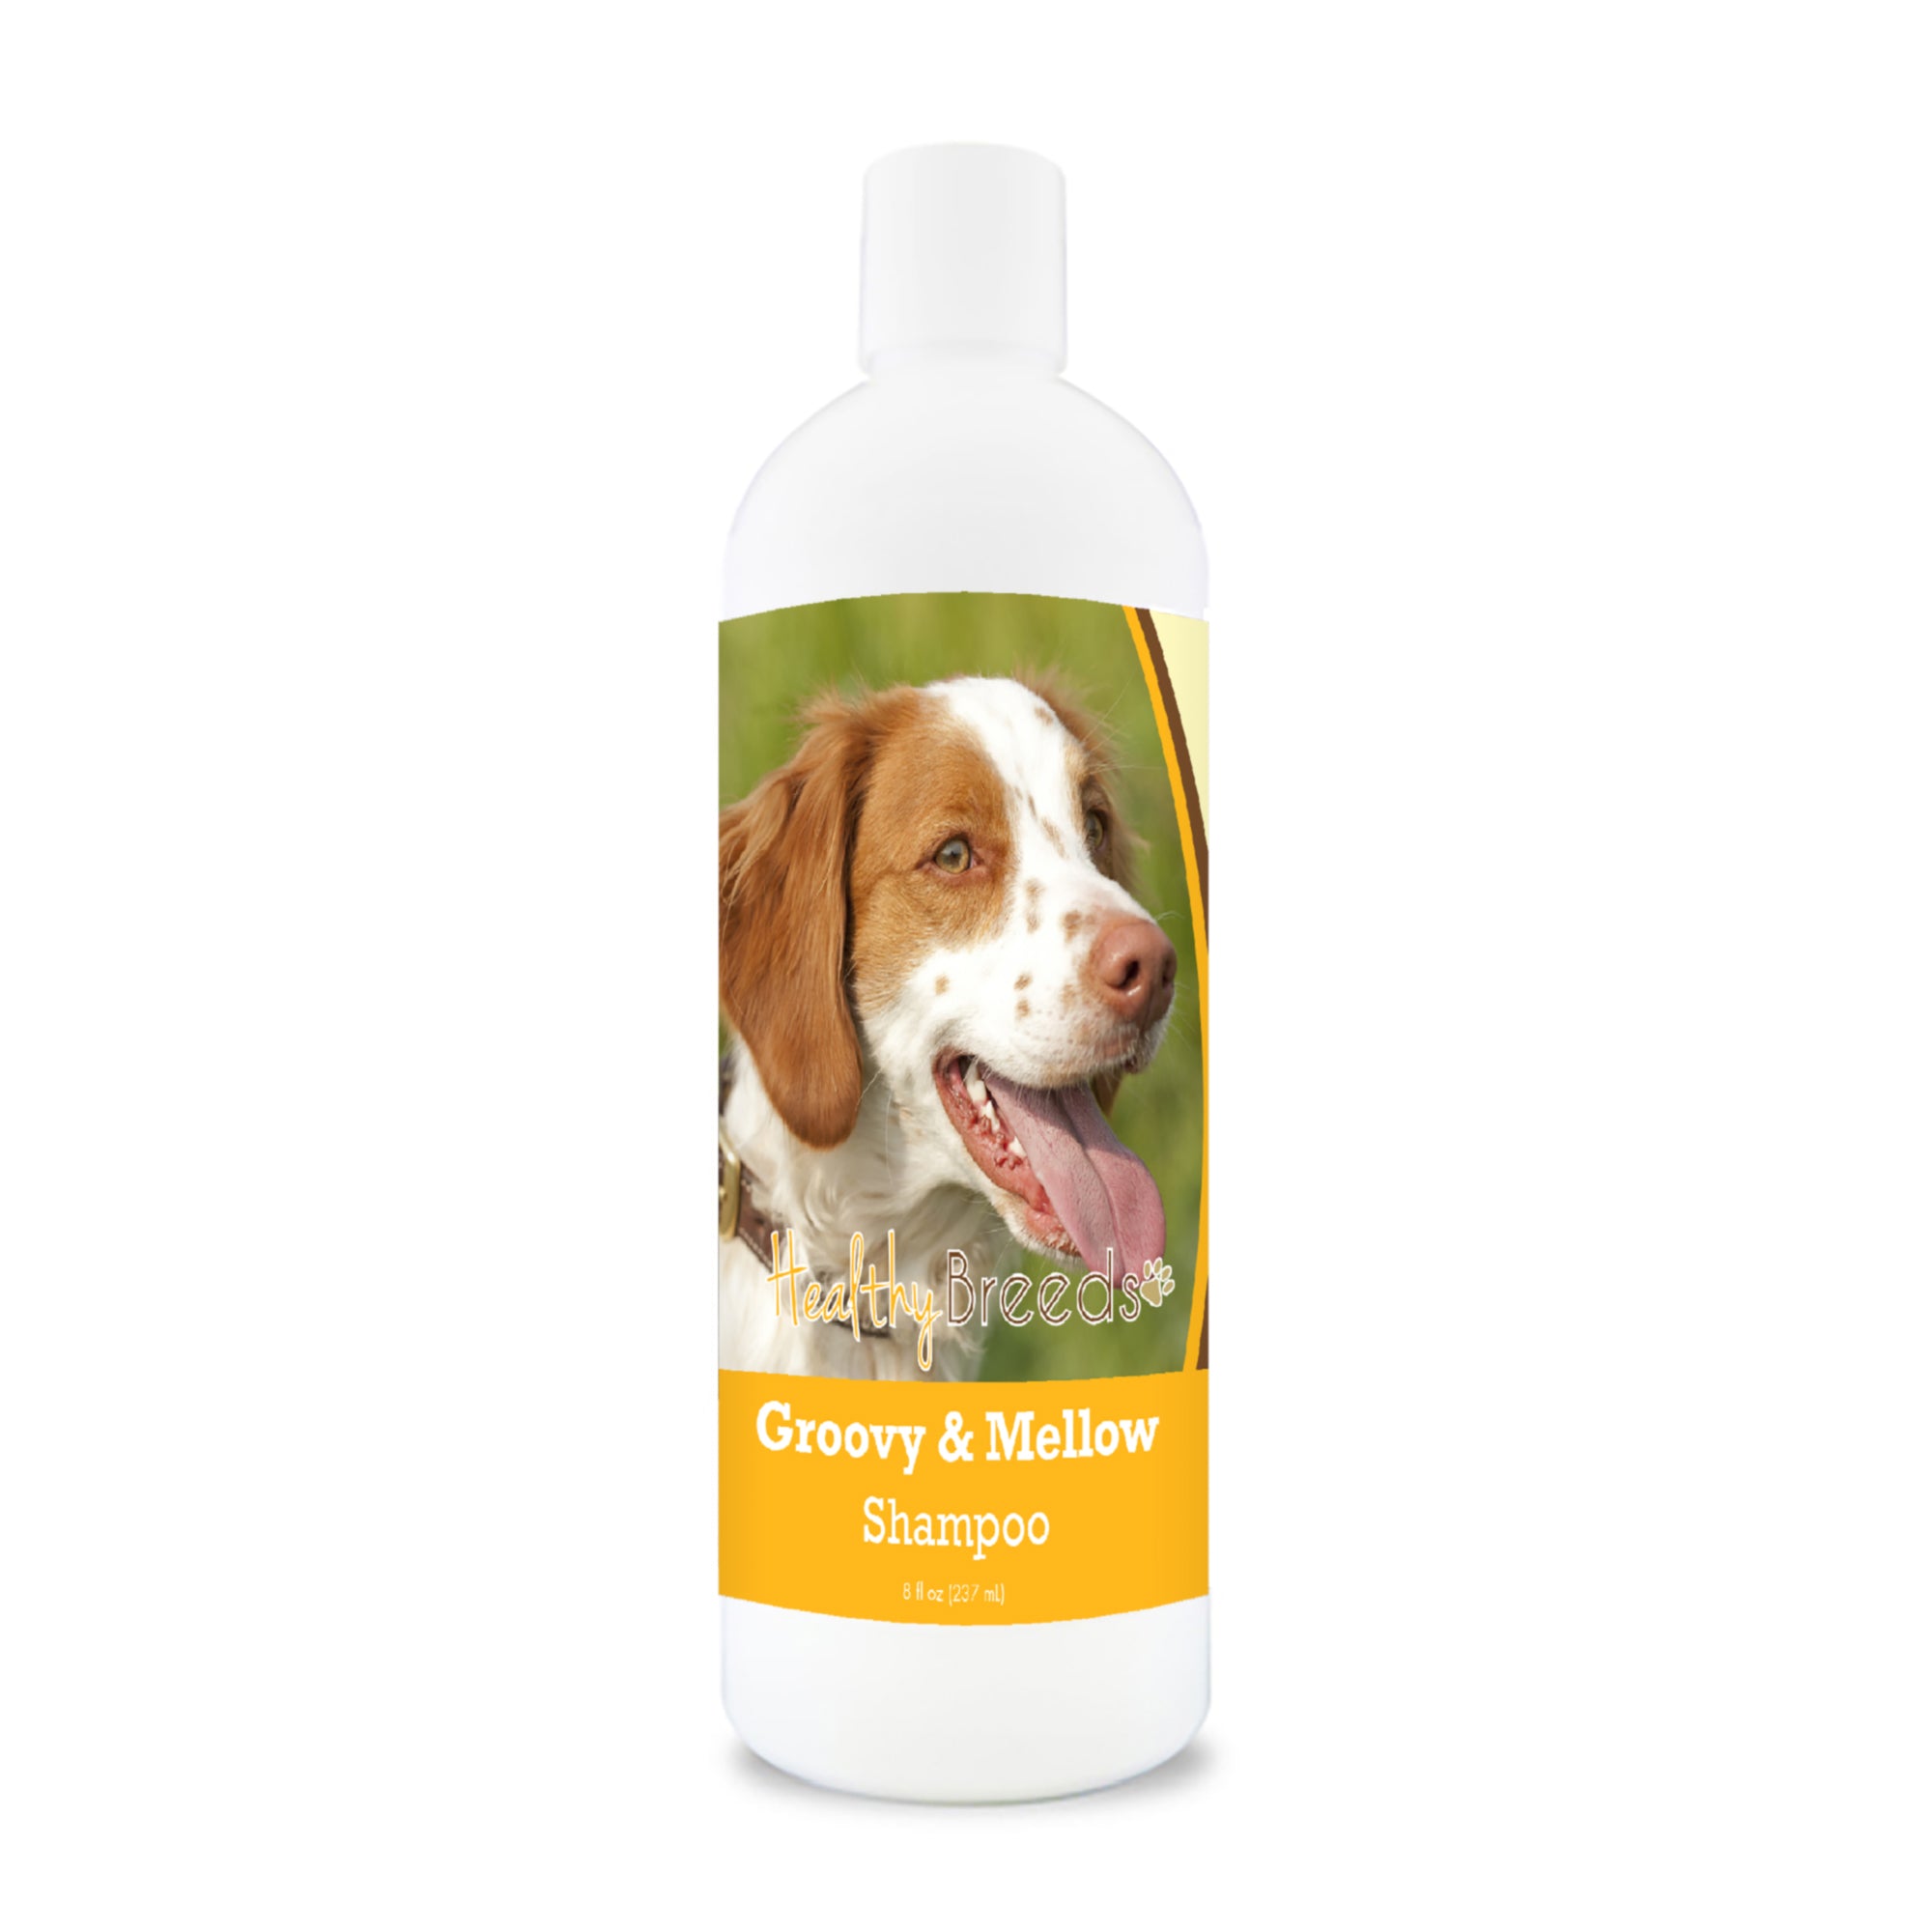 Brittany Groovy & Mellow Shampoo 8 oz